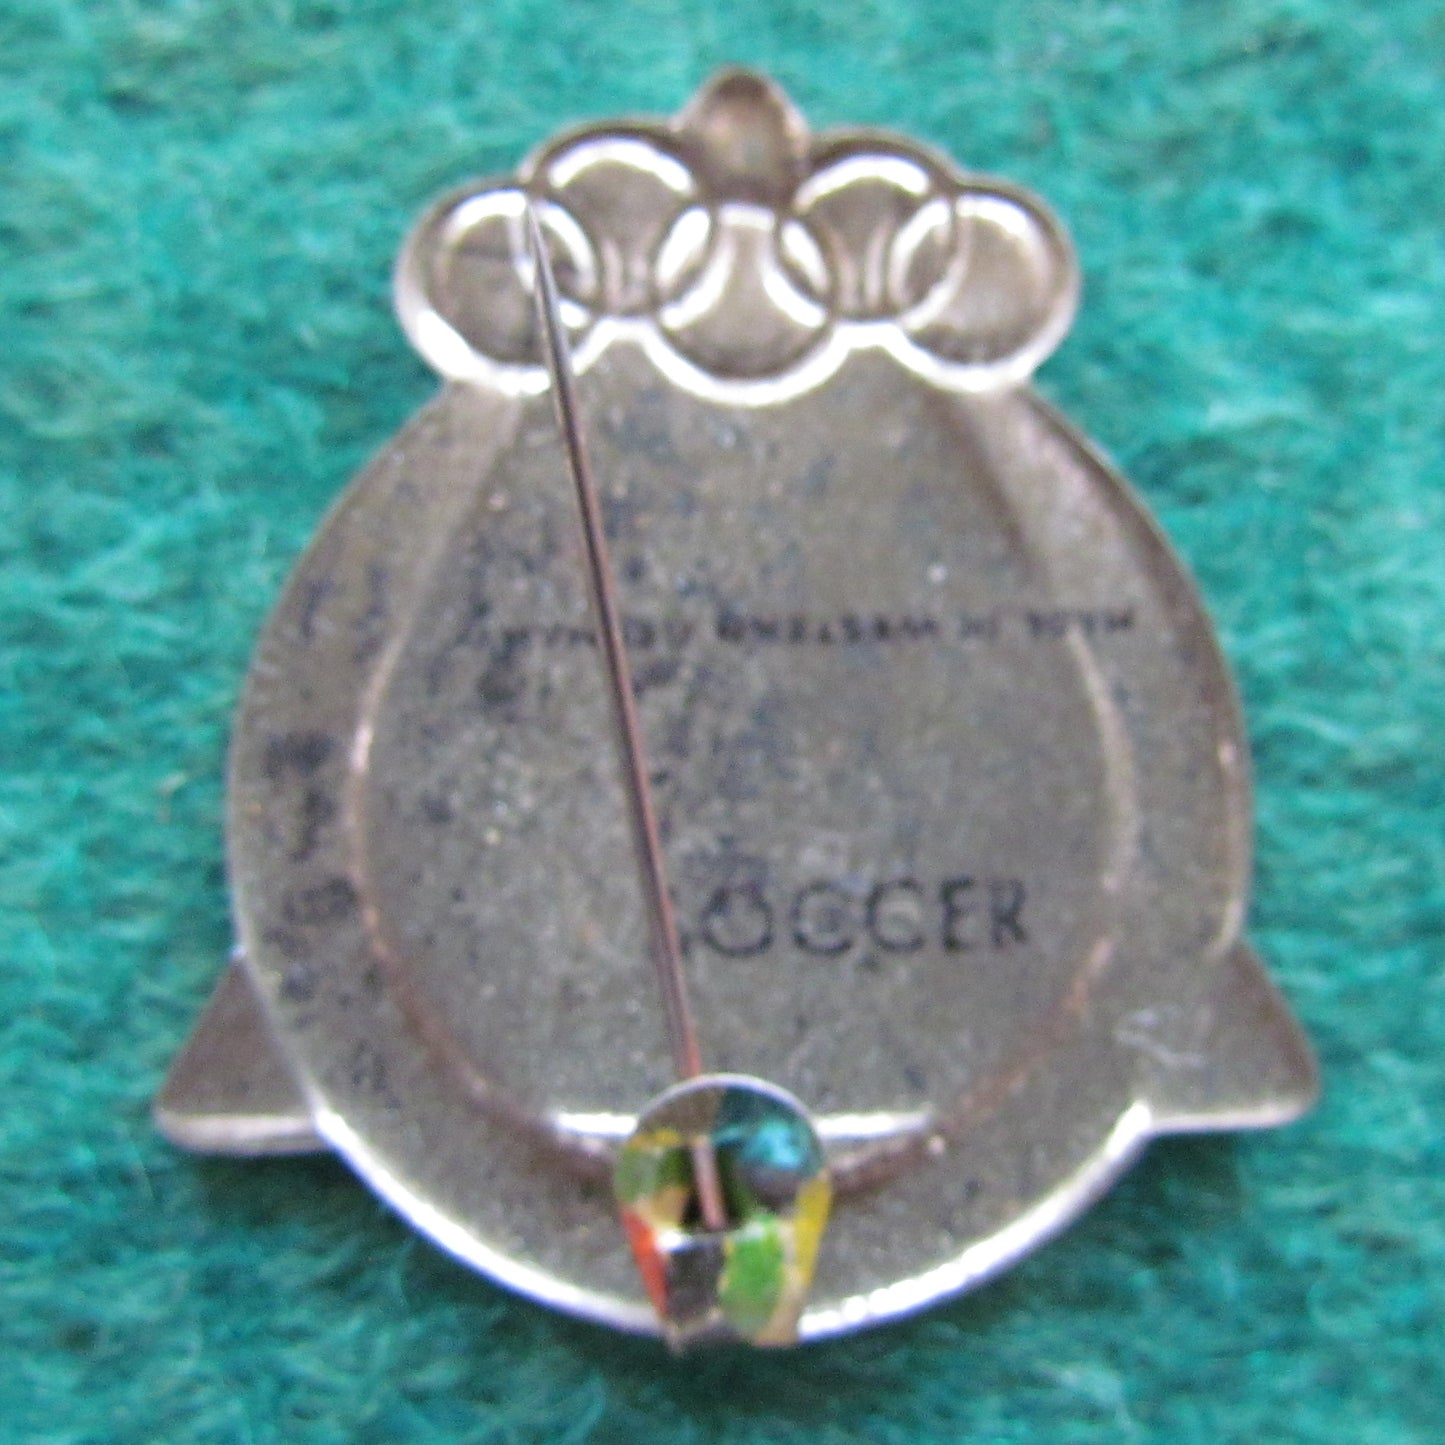 Australian Melbourne 1956 Olympic Games Soccer Tin Badge